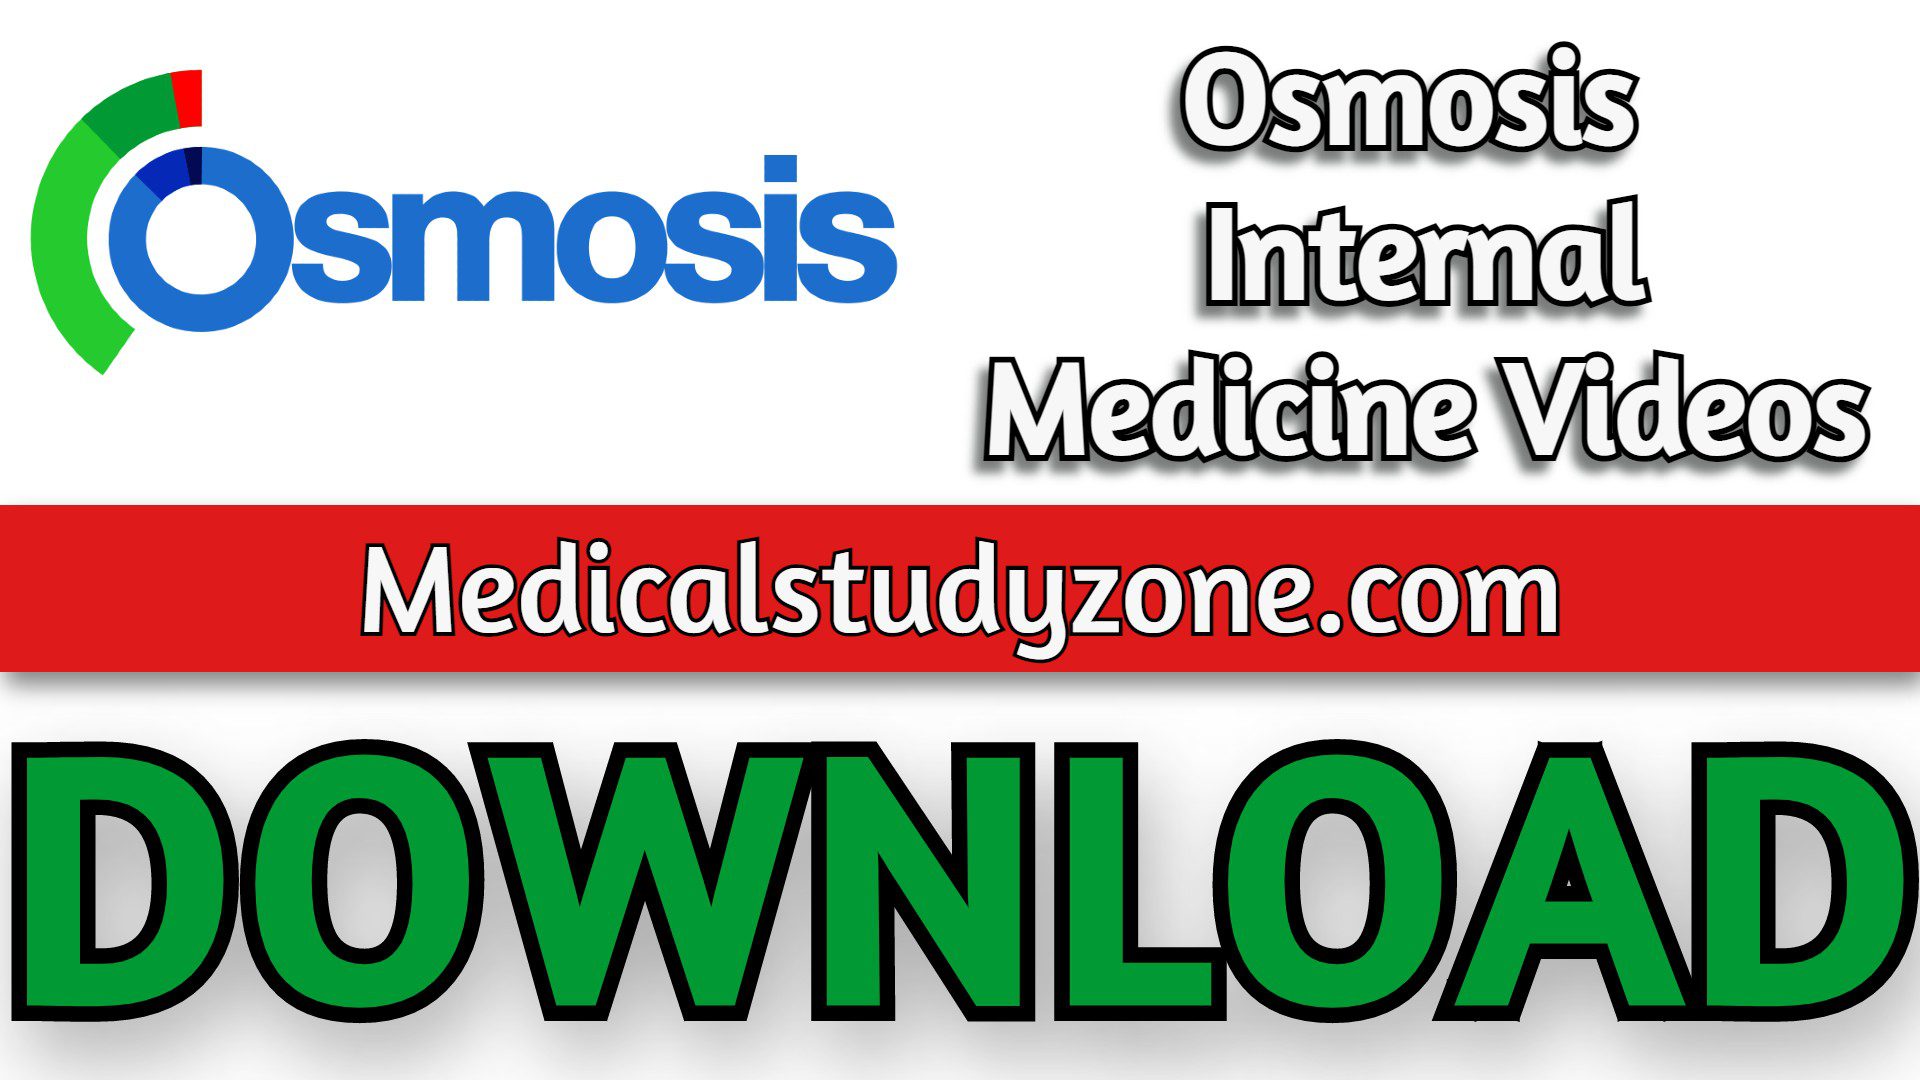 Osmosis Internal Medicine Videos 2022 Free Download